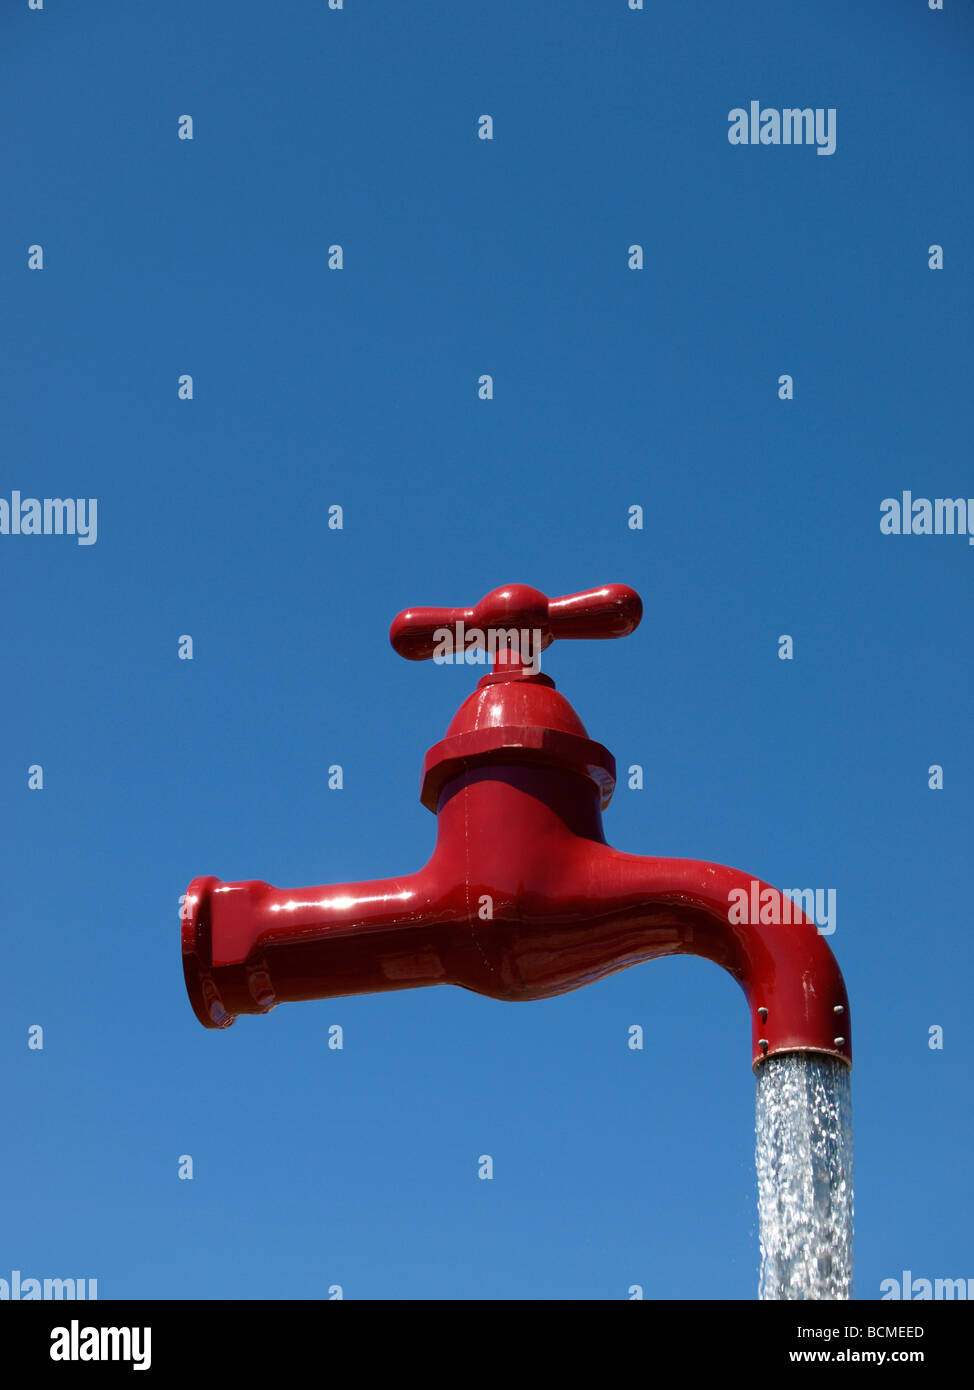 Giant red tap fountain, Cala Galdana, Menorca, Spain Stock Photo